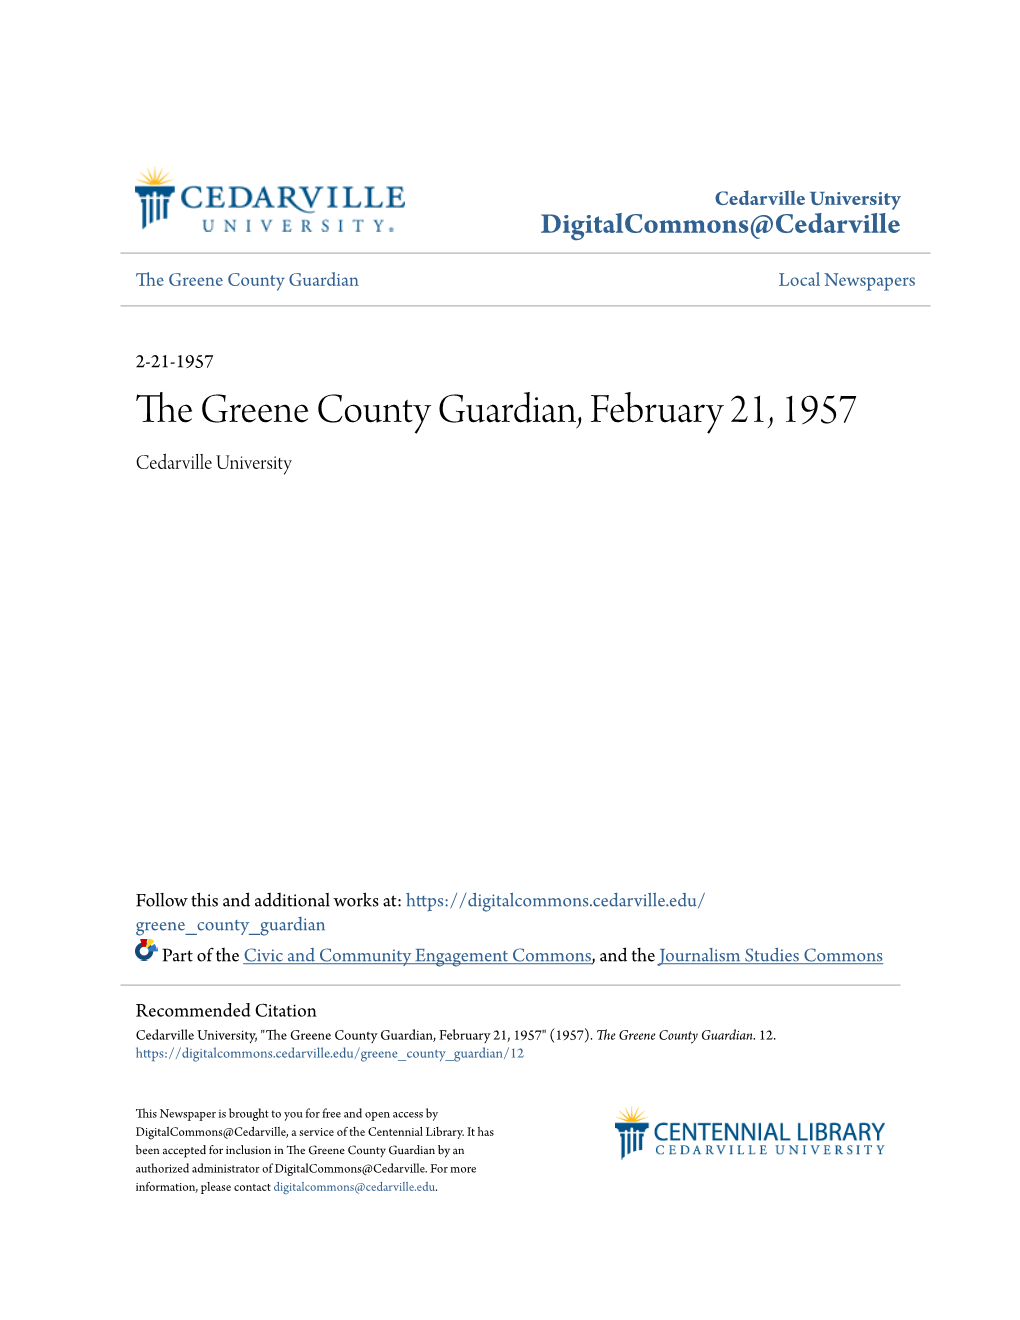 The Greene County Guardian, February 21, 1957 Cedarville University